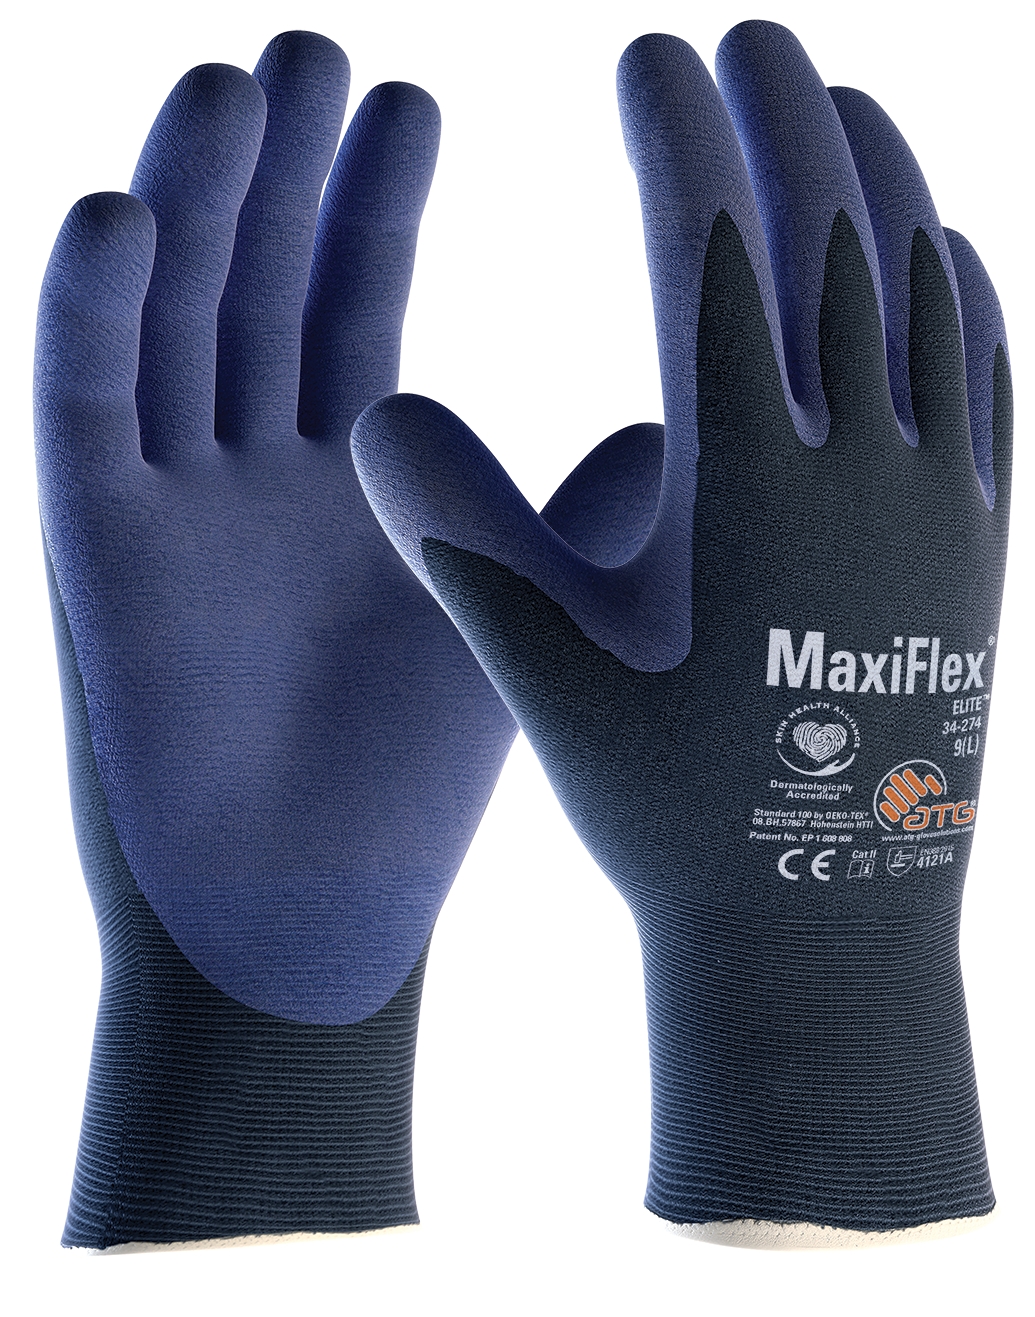 MaxiFlex® Elite™ Nylon-Strickhandschuhe '(34-274)', 11 